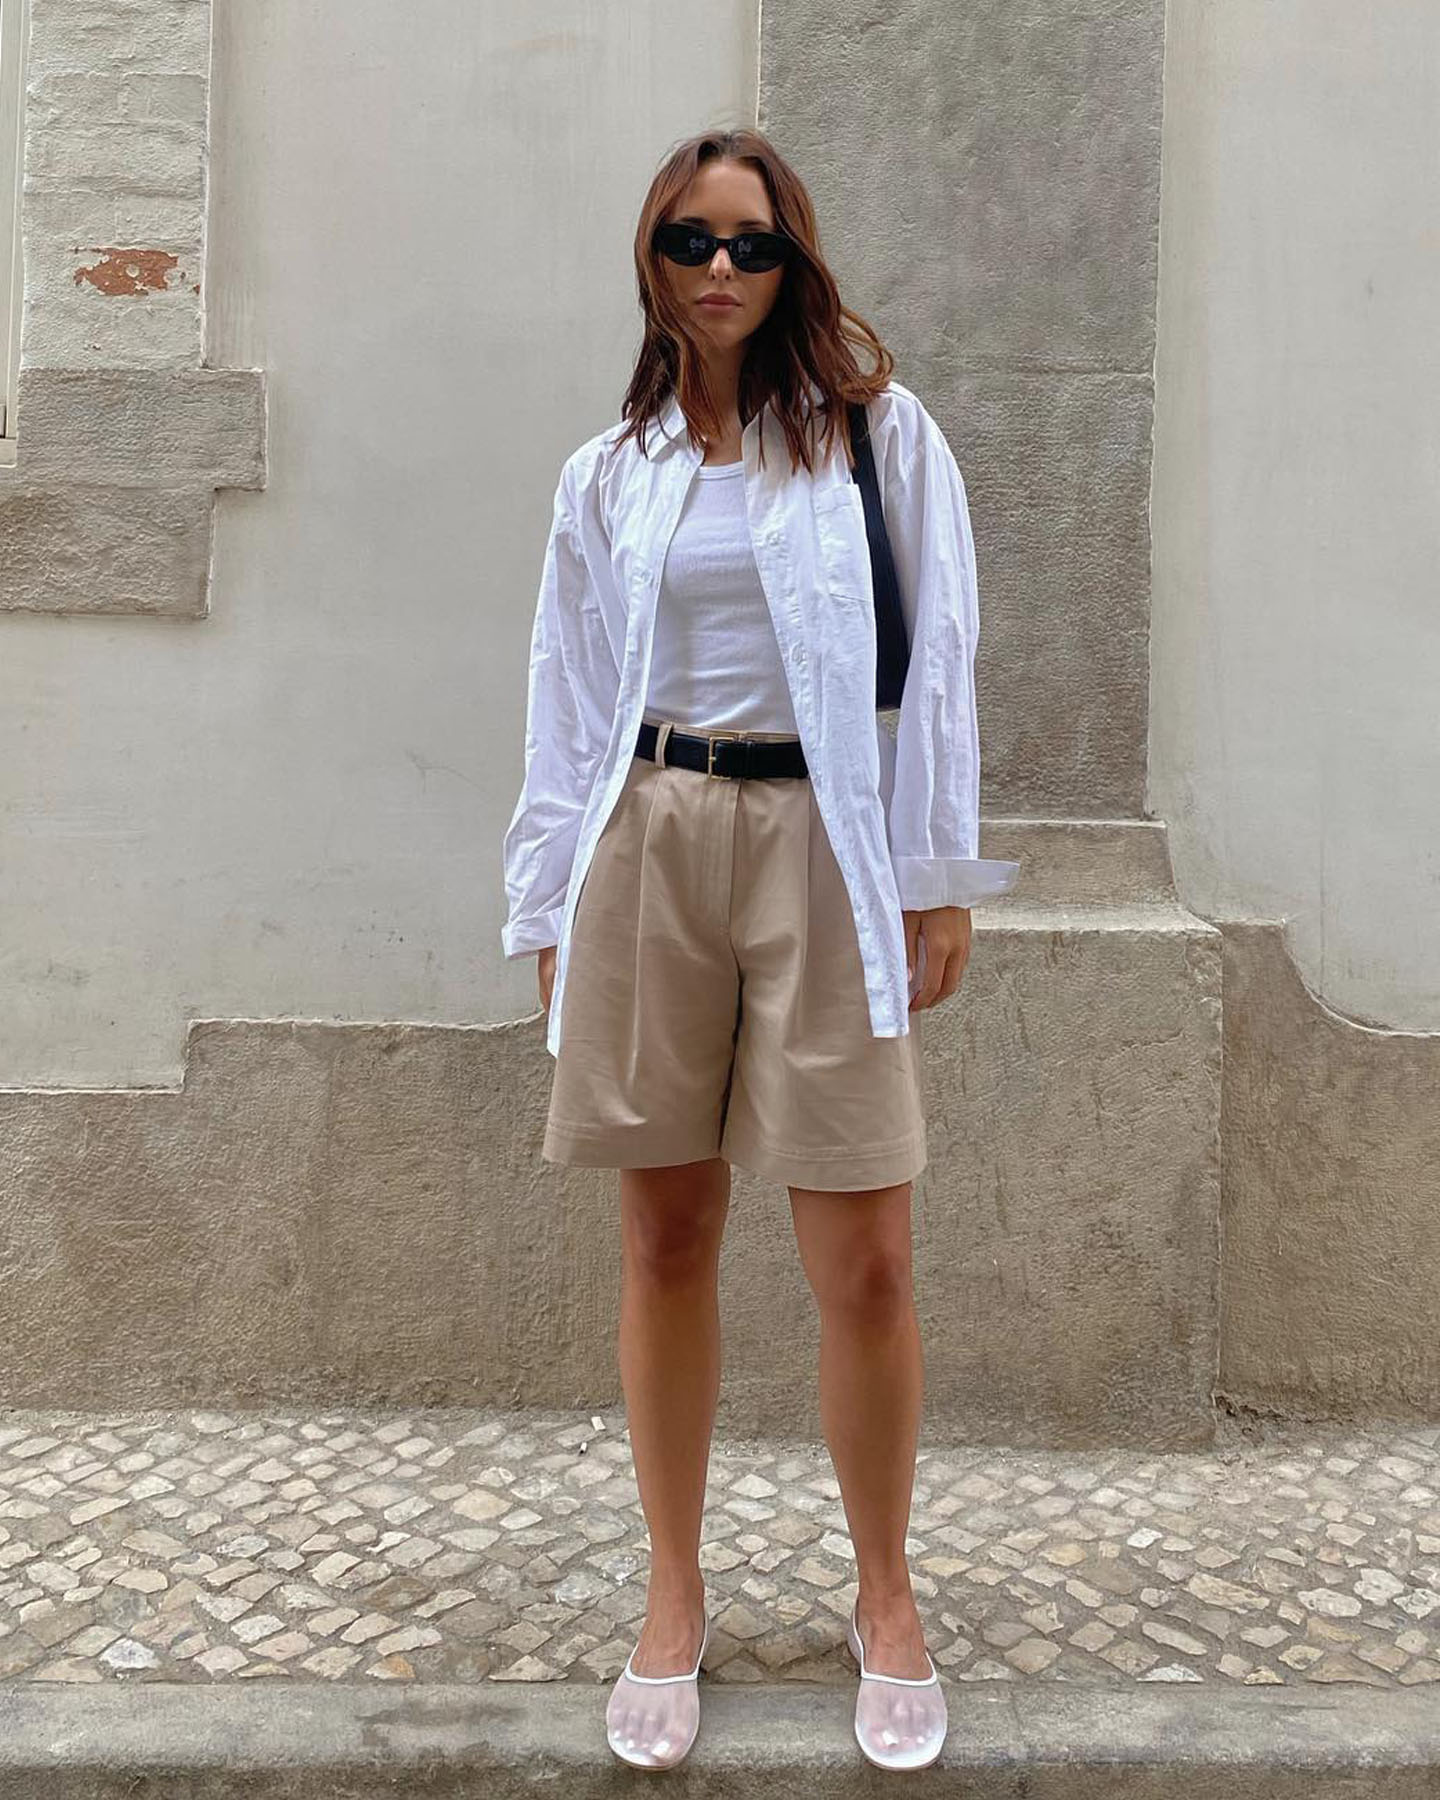 Influencer Debora Rosa wears oval sunglasses, a white button-down shirt, white tank top, black belt, khaki mid-length shorts, and white mesh flats.